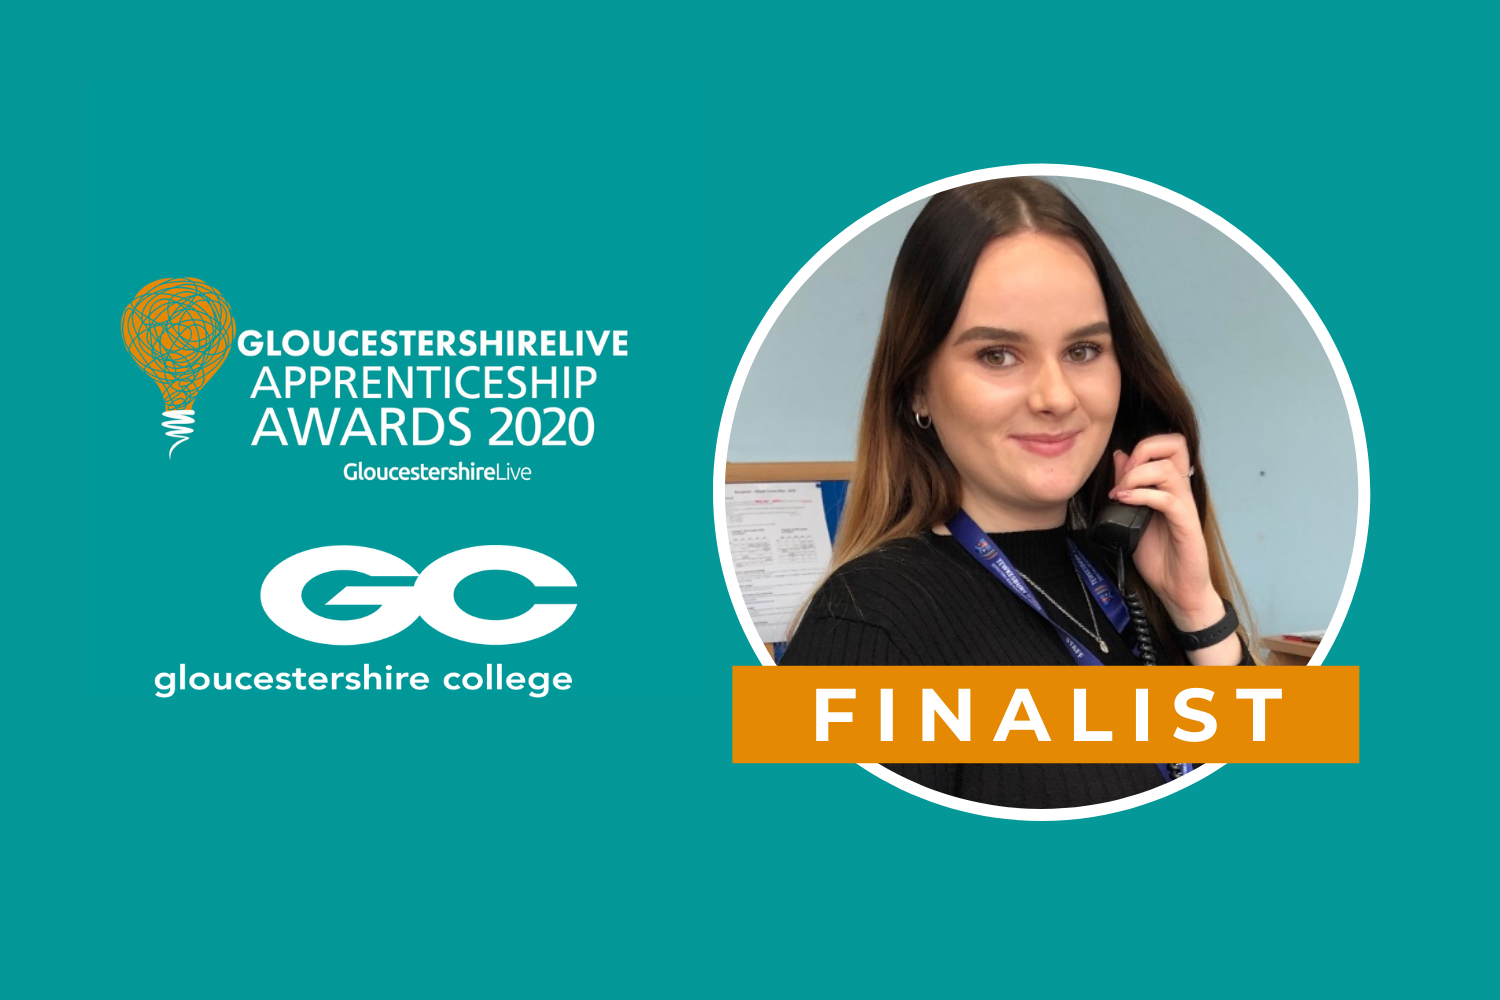 Apprentice Spotlight: Ella Russell, GloucestershireLive Apprenticeship Awards 2020 Finalist